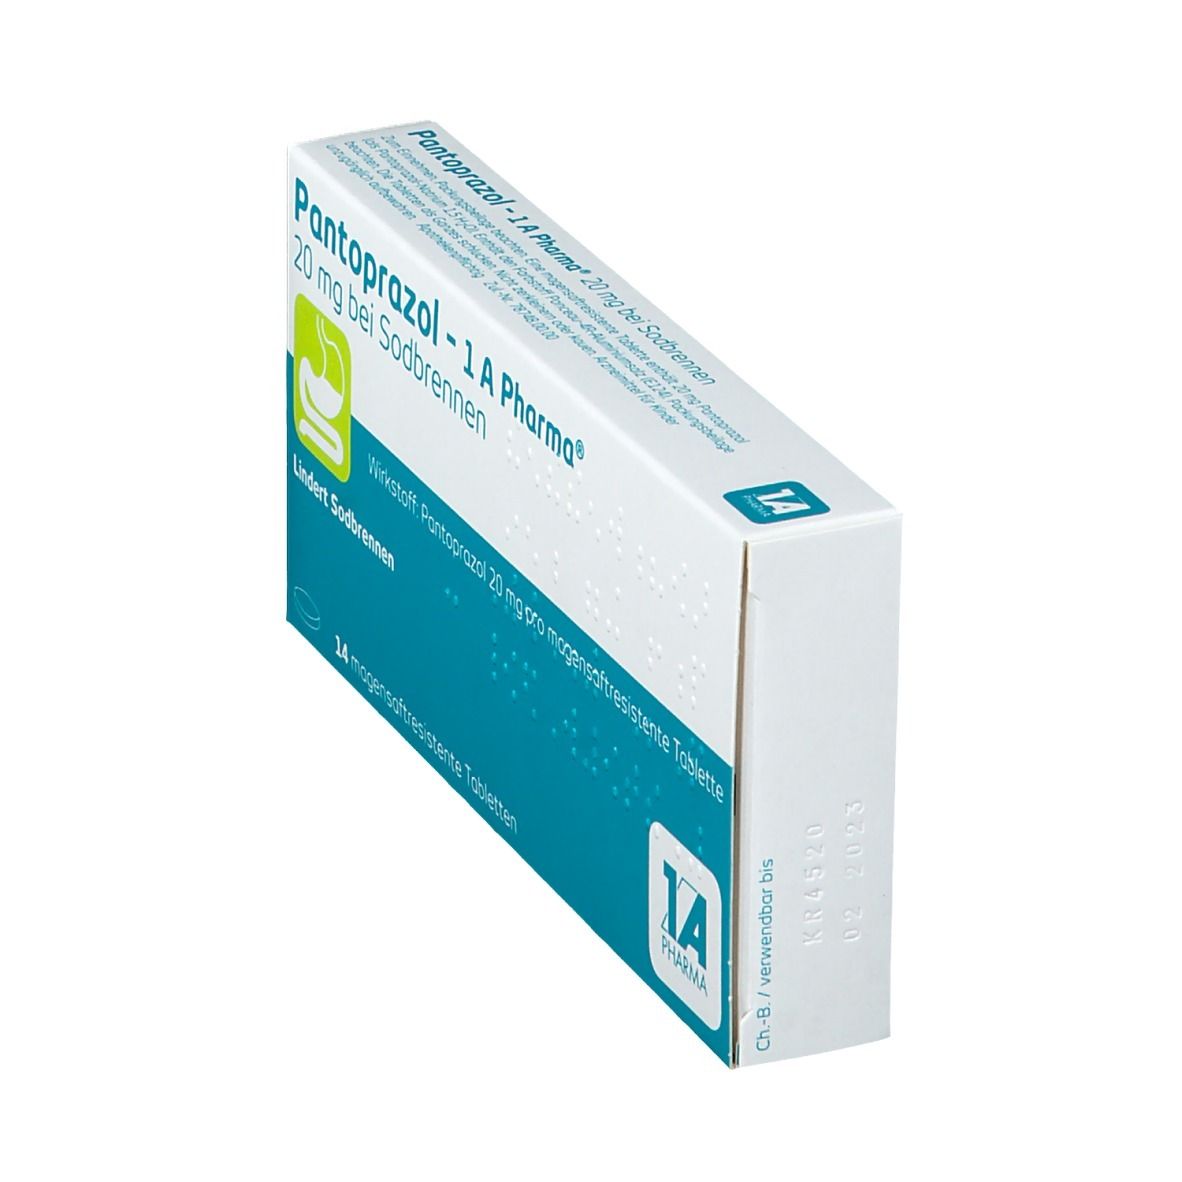 Pantoprazol - 1 A Pharma® 20 mg bei Sodbrennen